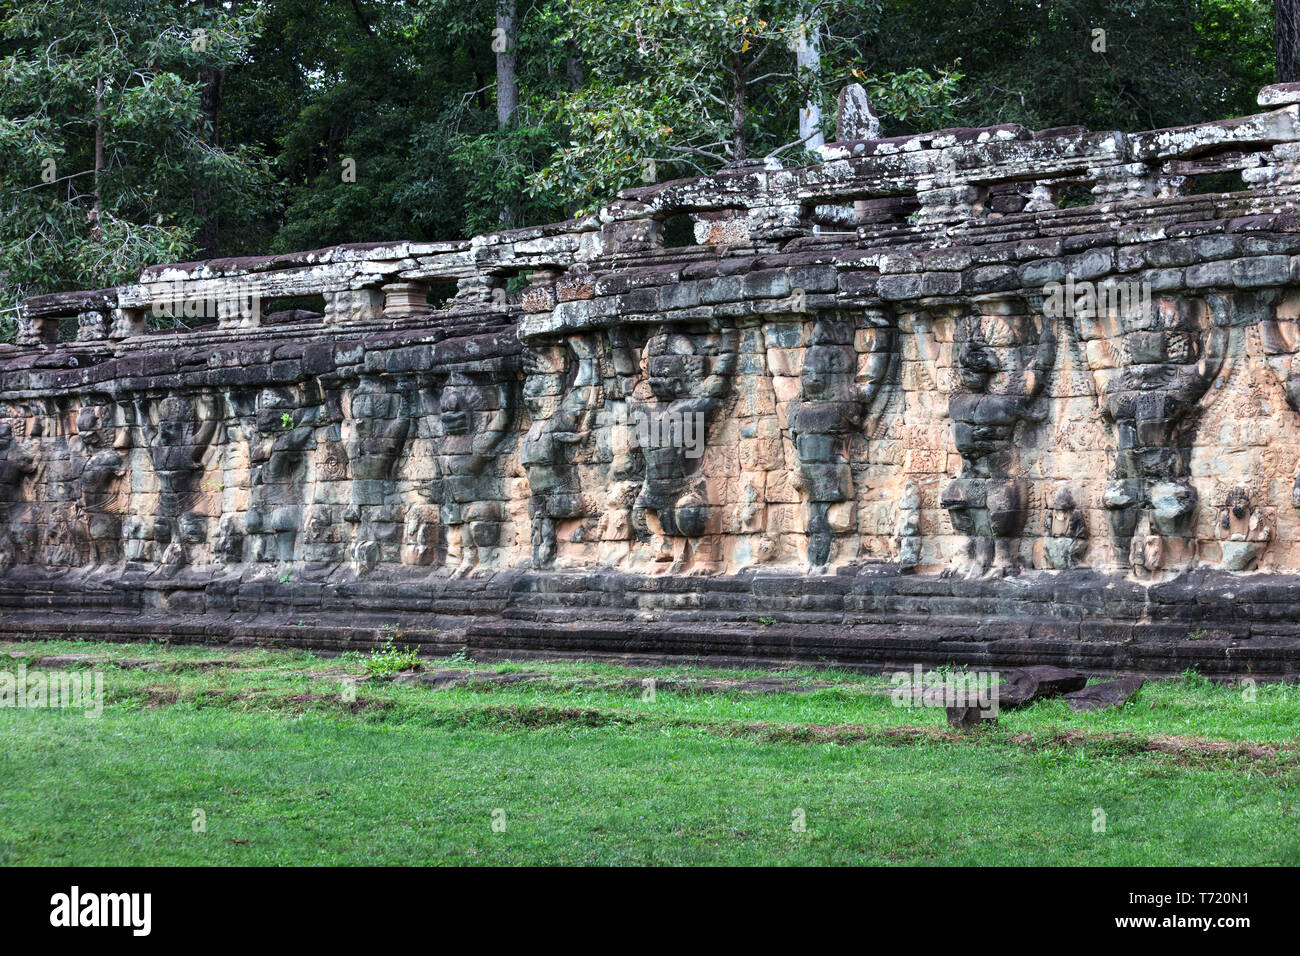 terrace of elephants at Angkor Thom complex, Cambodia Stock Photo